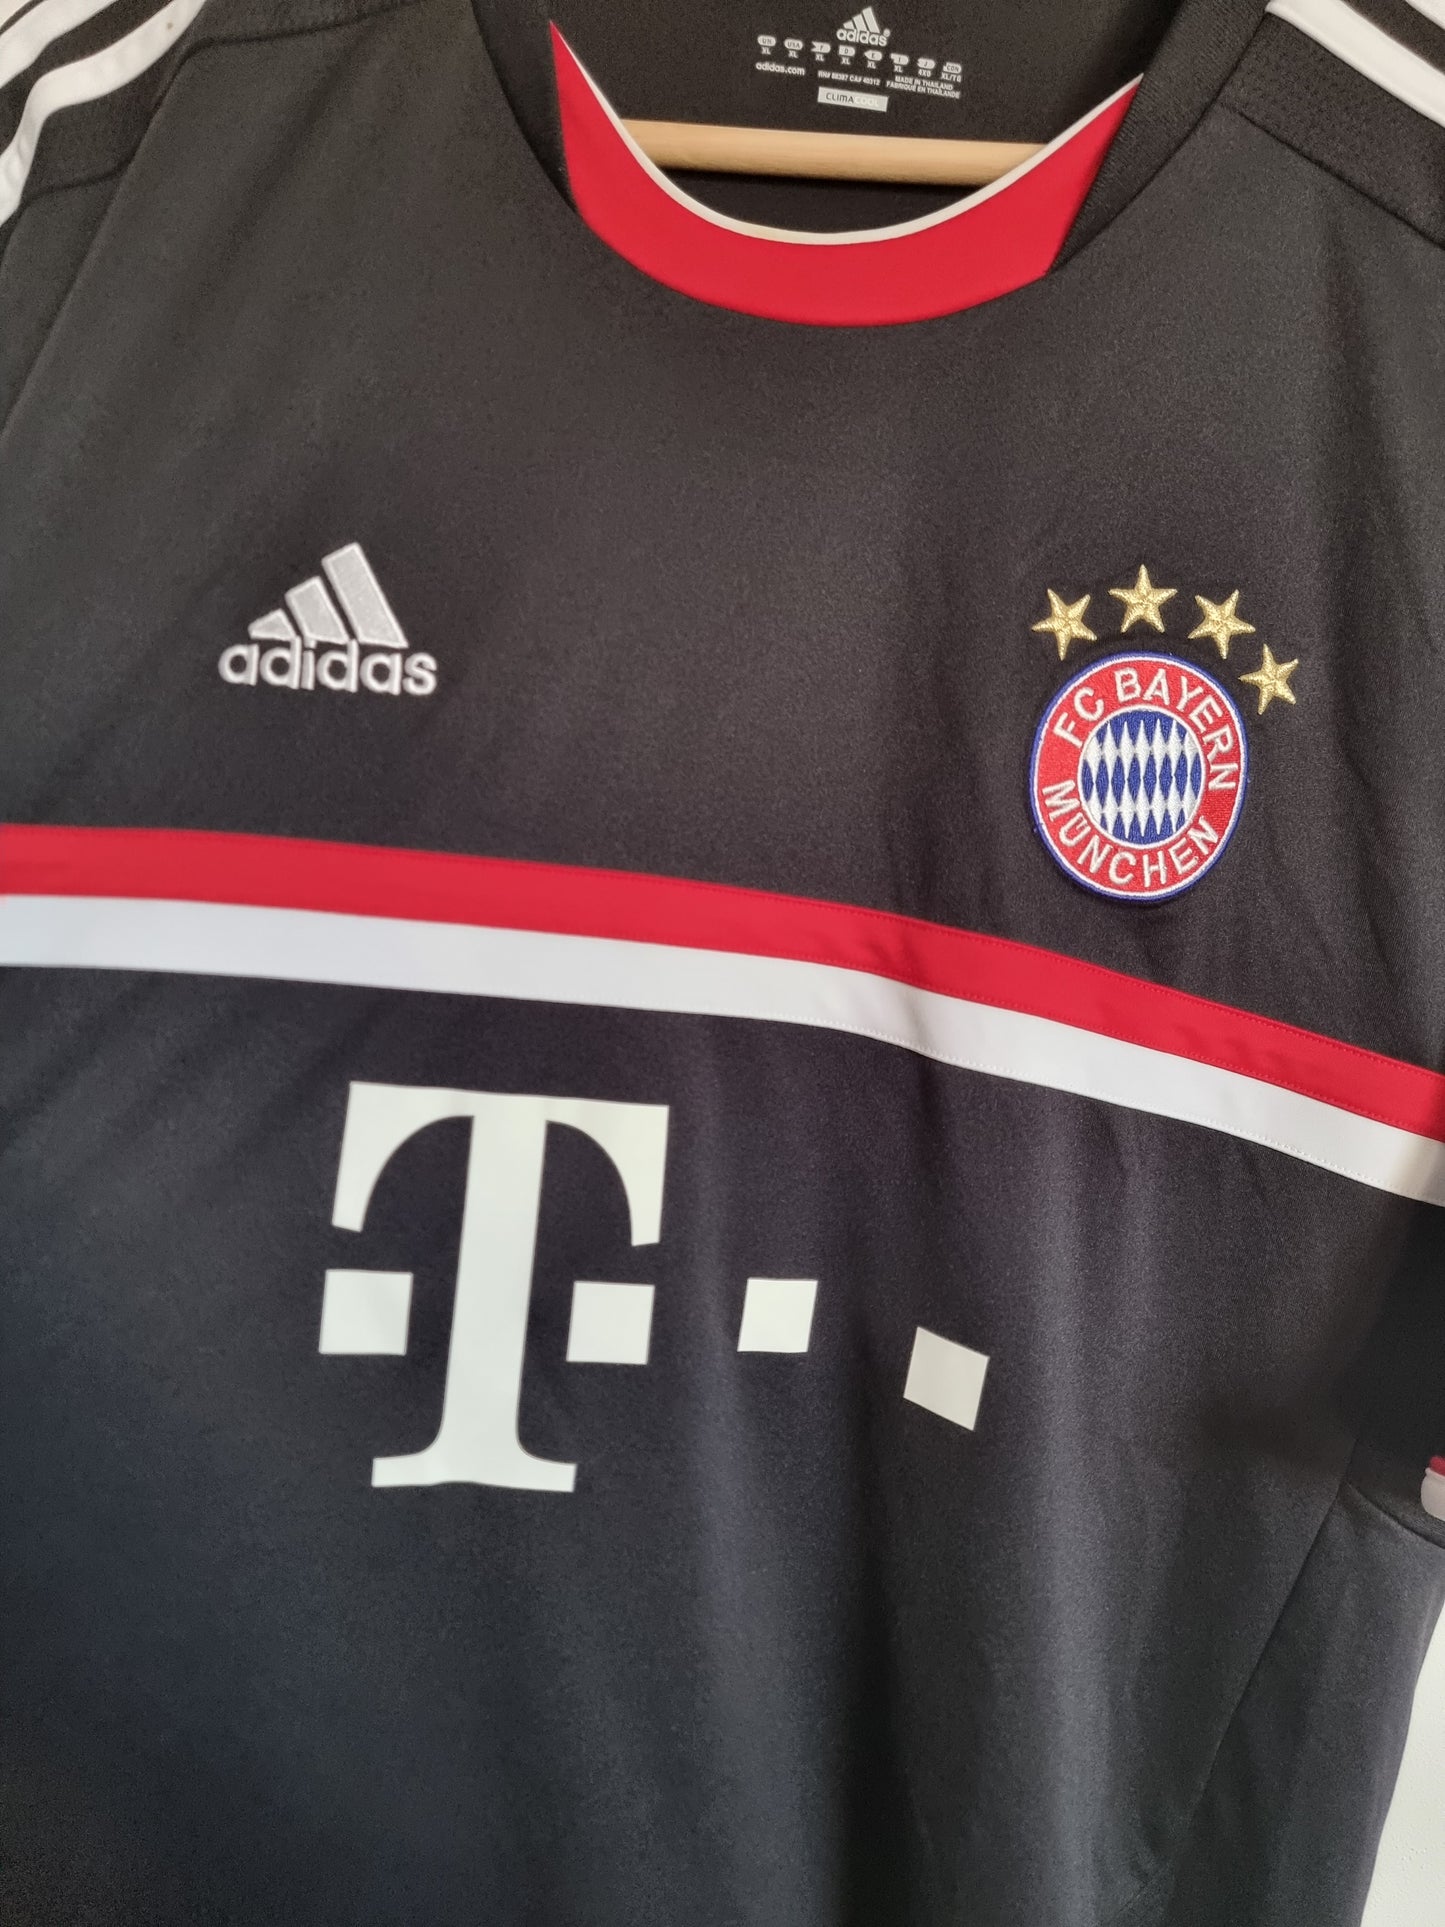 Adidas Bayern Munich 11/12 'Schweinsteiger 31' Third Shirt XL